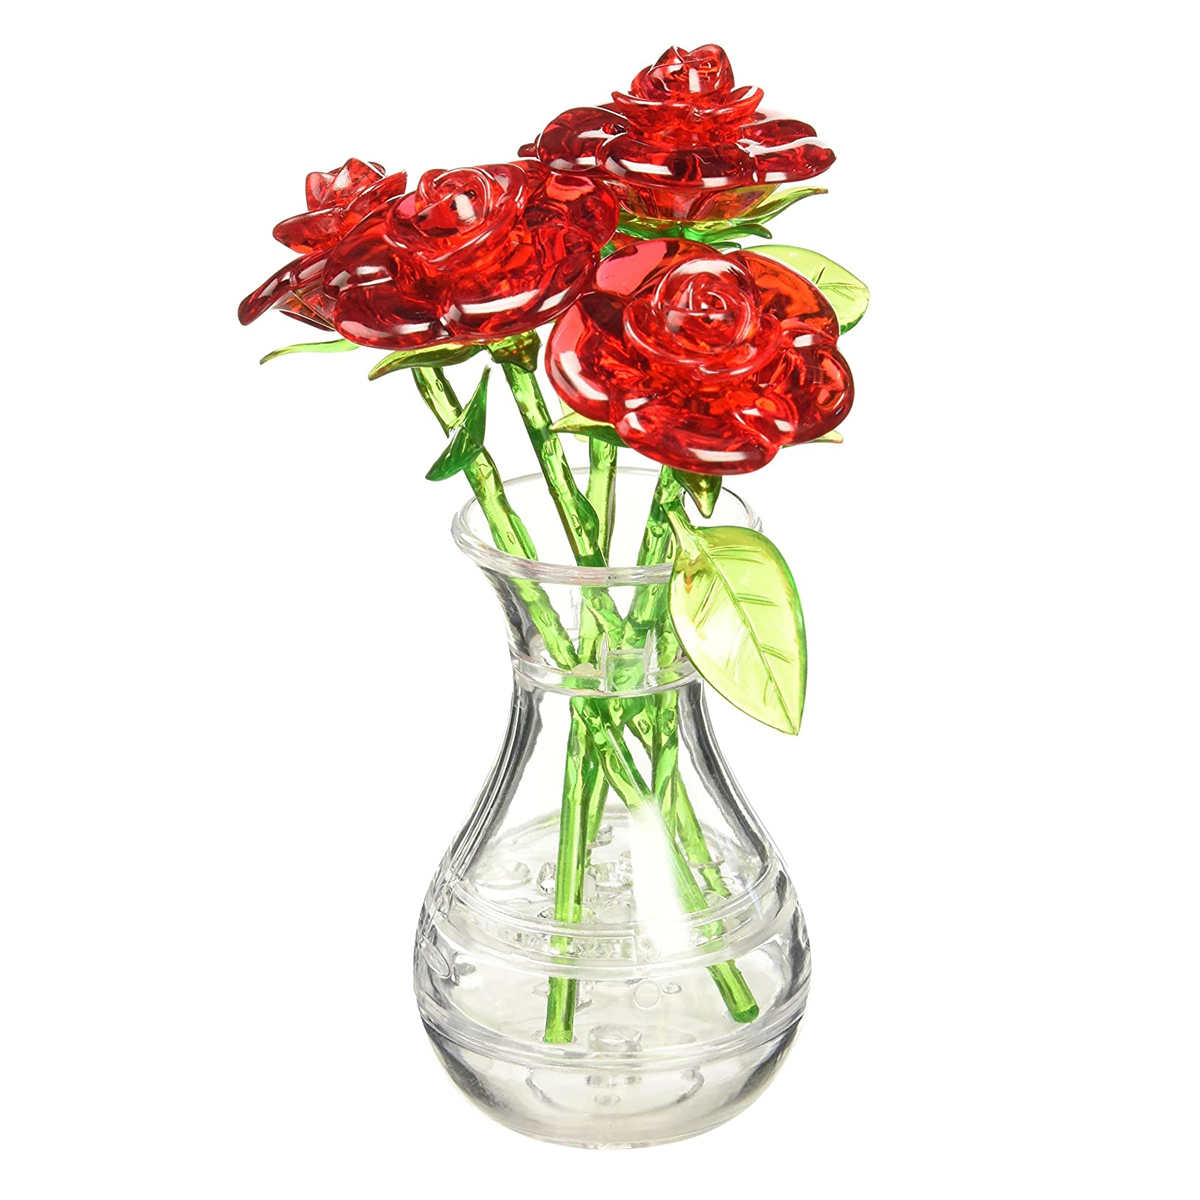 BePuzzled Original 3D Crystal Puzzle Roses in Vase Standard - Level 2